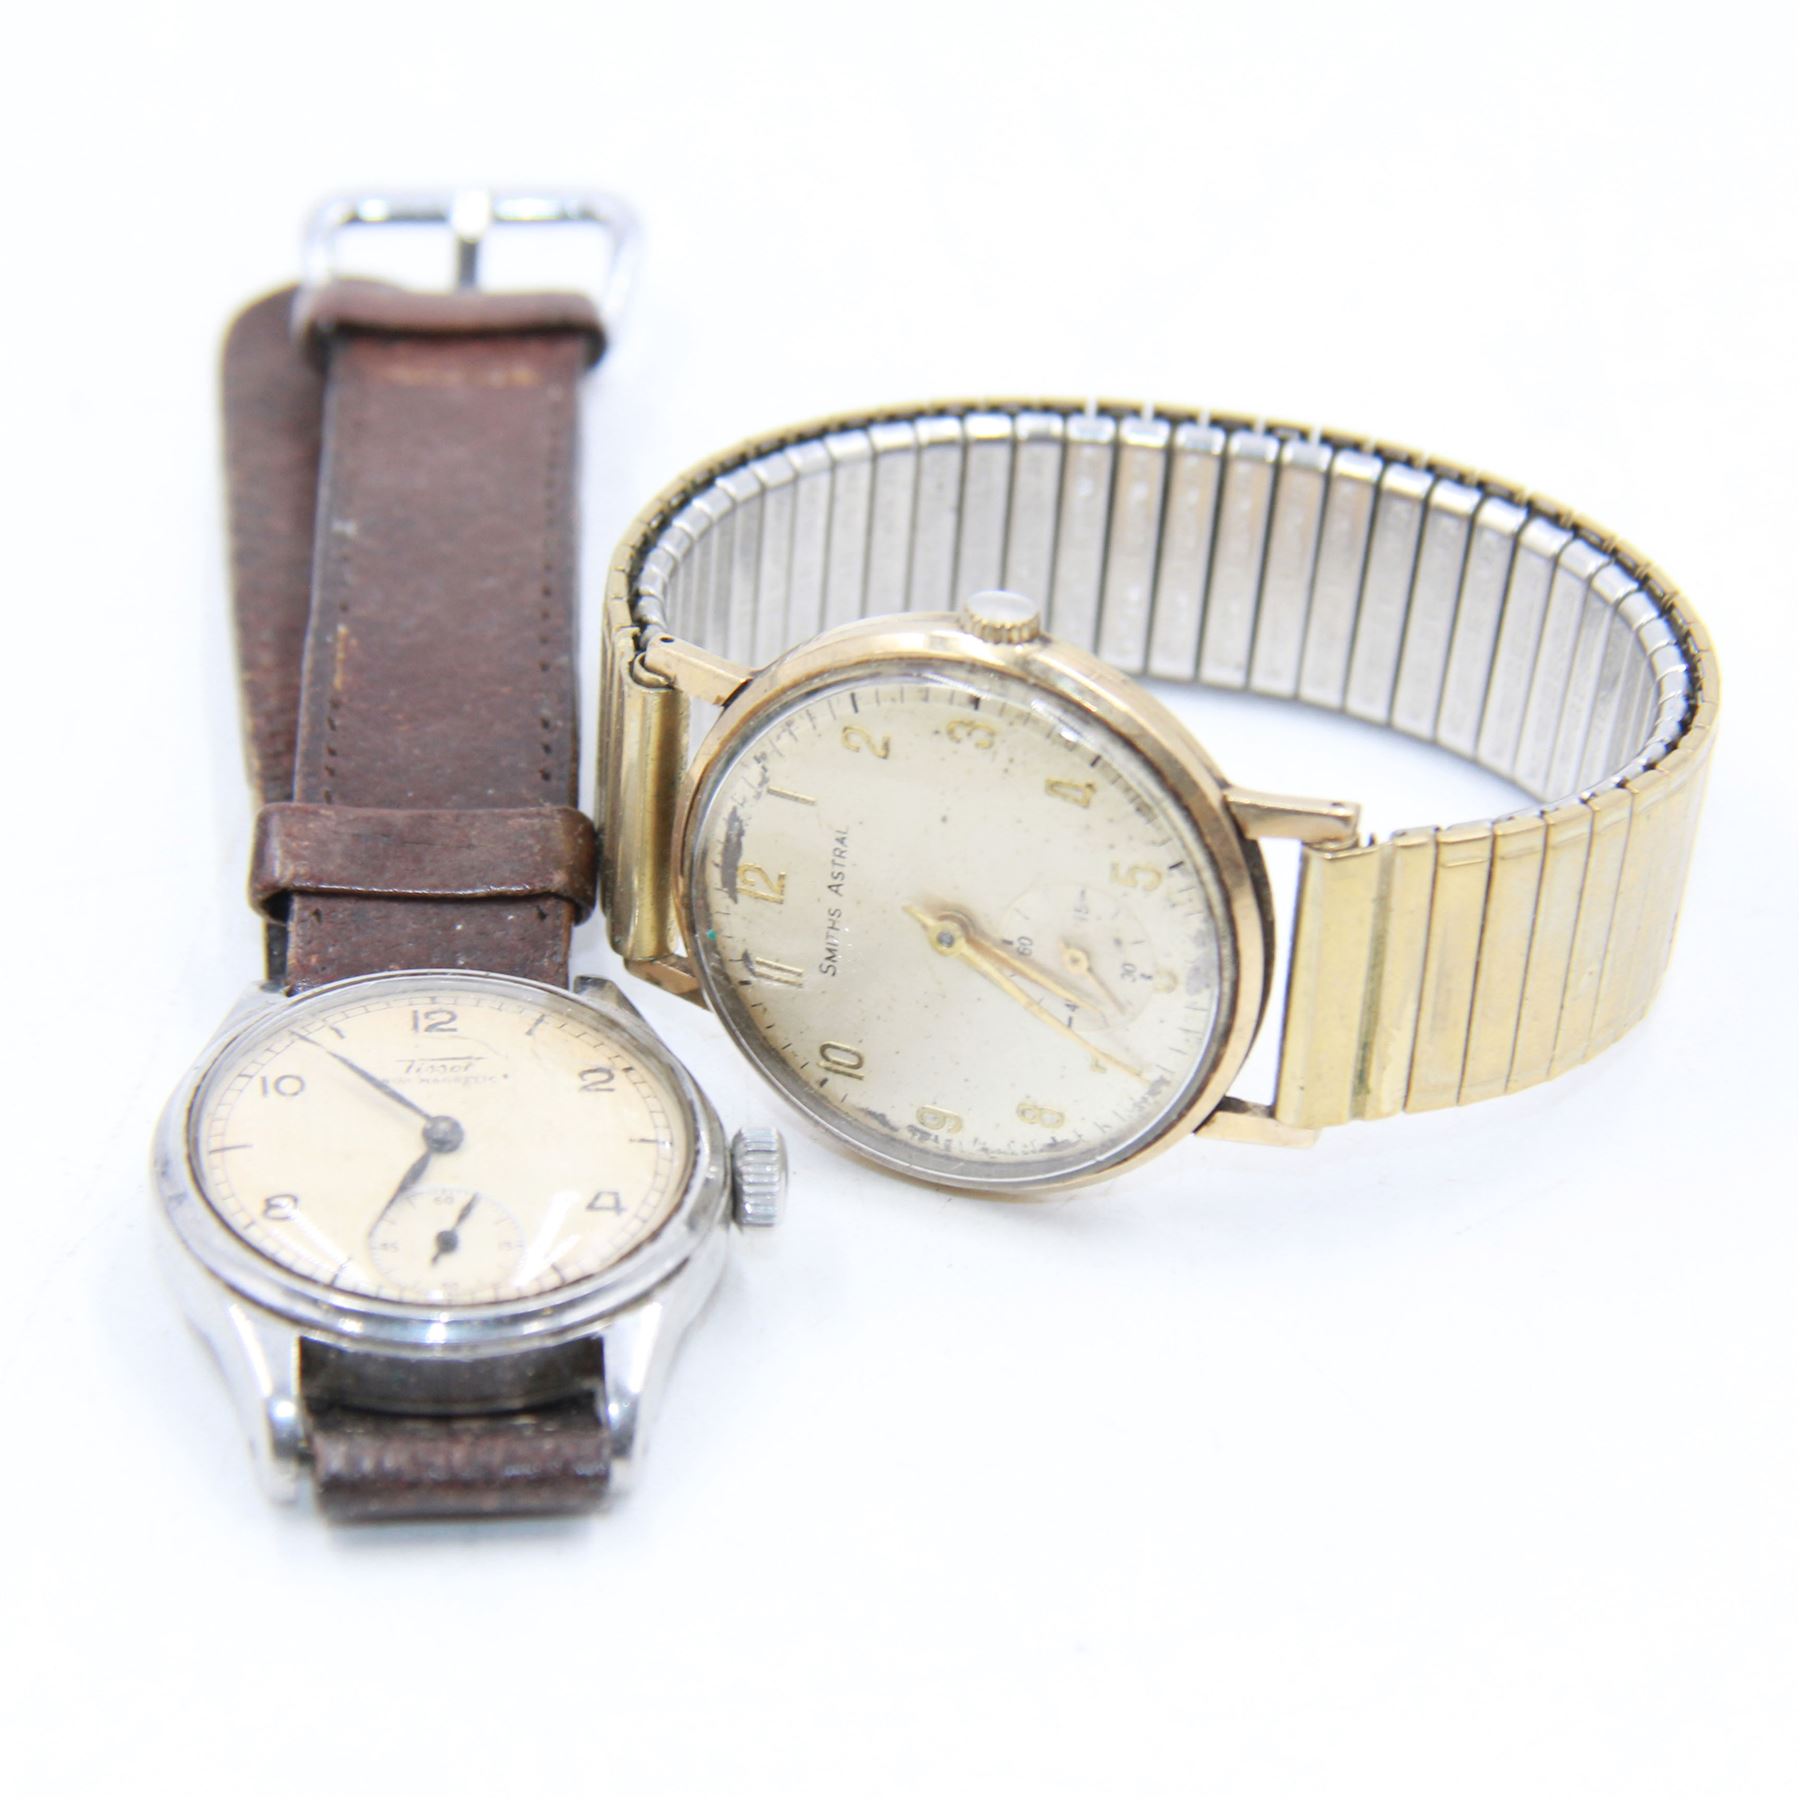 Smiths Astral gentleman's 9ct gold manual wind wristwatch